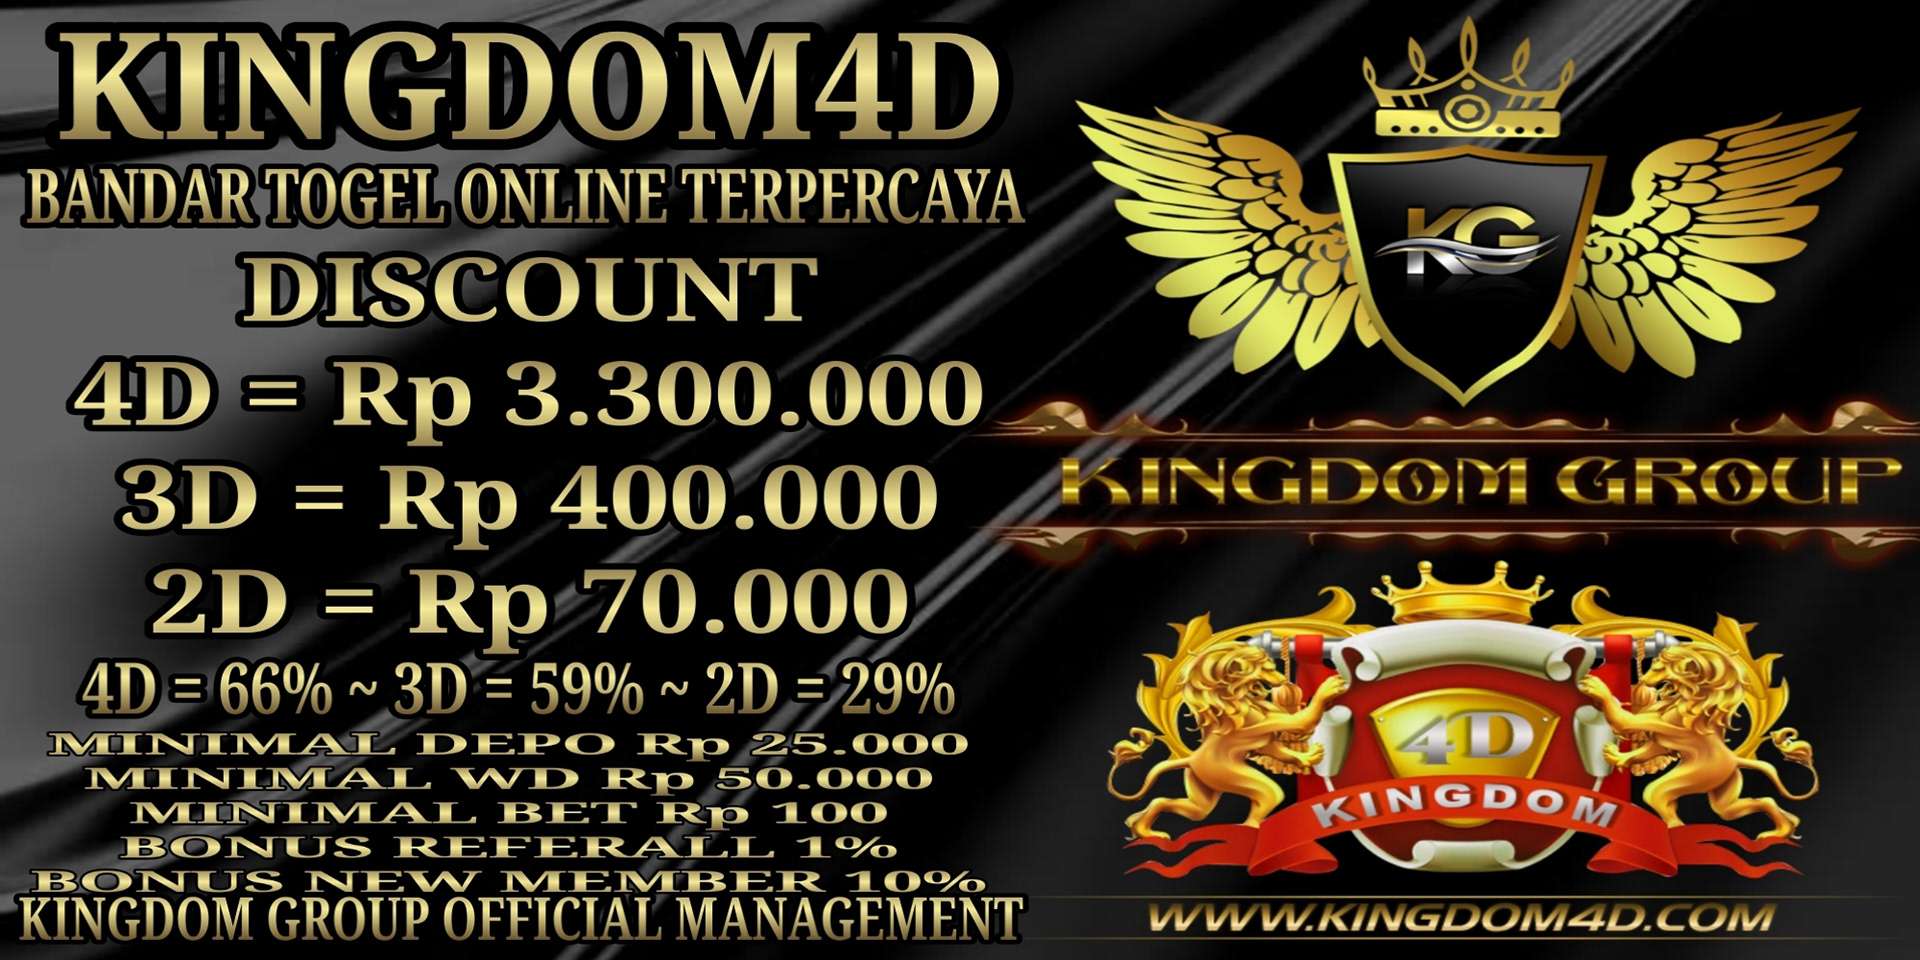 kingdomtoto | bandar togel online terpercaya | kingdomgroup